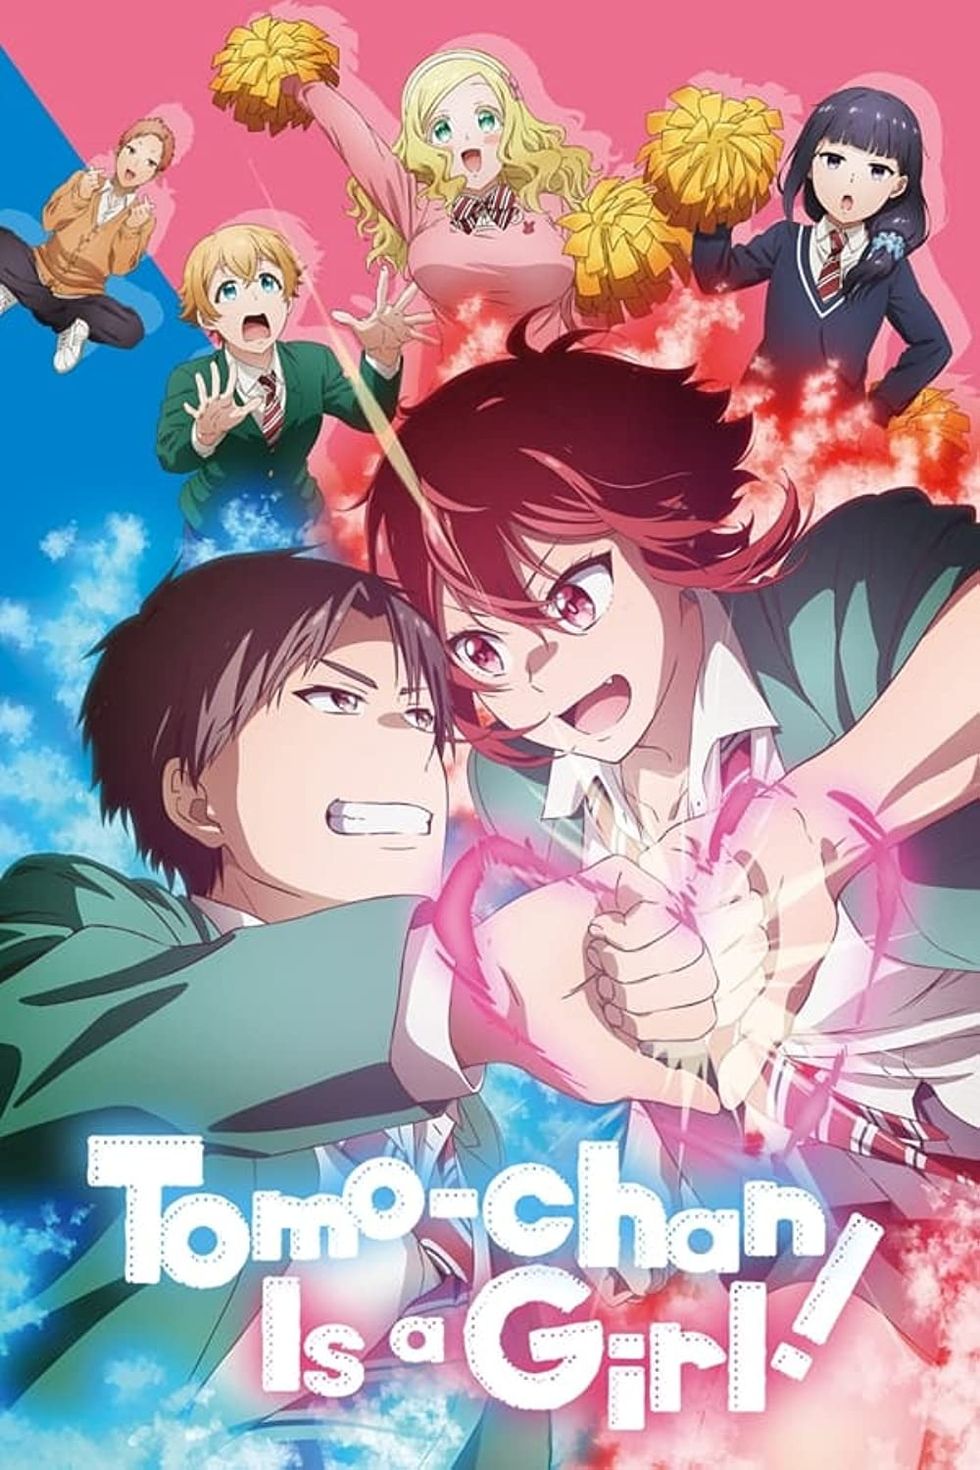 Anime minimalist poster  Best romance anime, Anime films, Anime